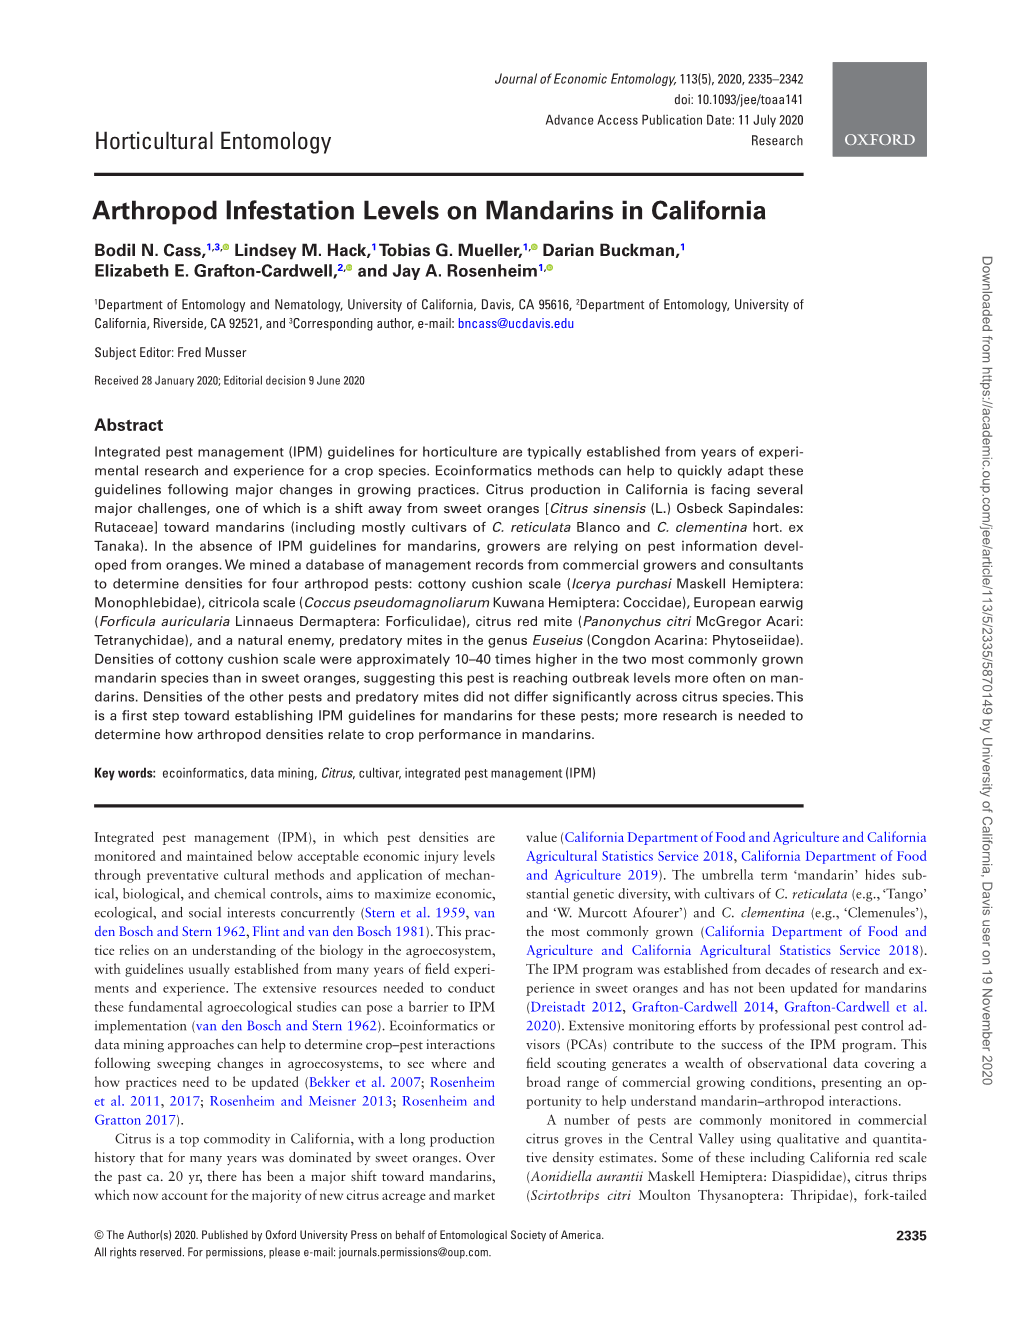 Arthropod Infestation Levels on Mandarins in California